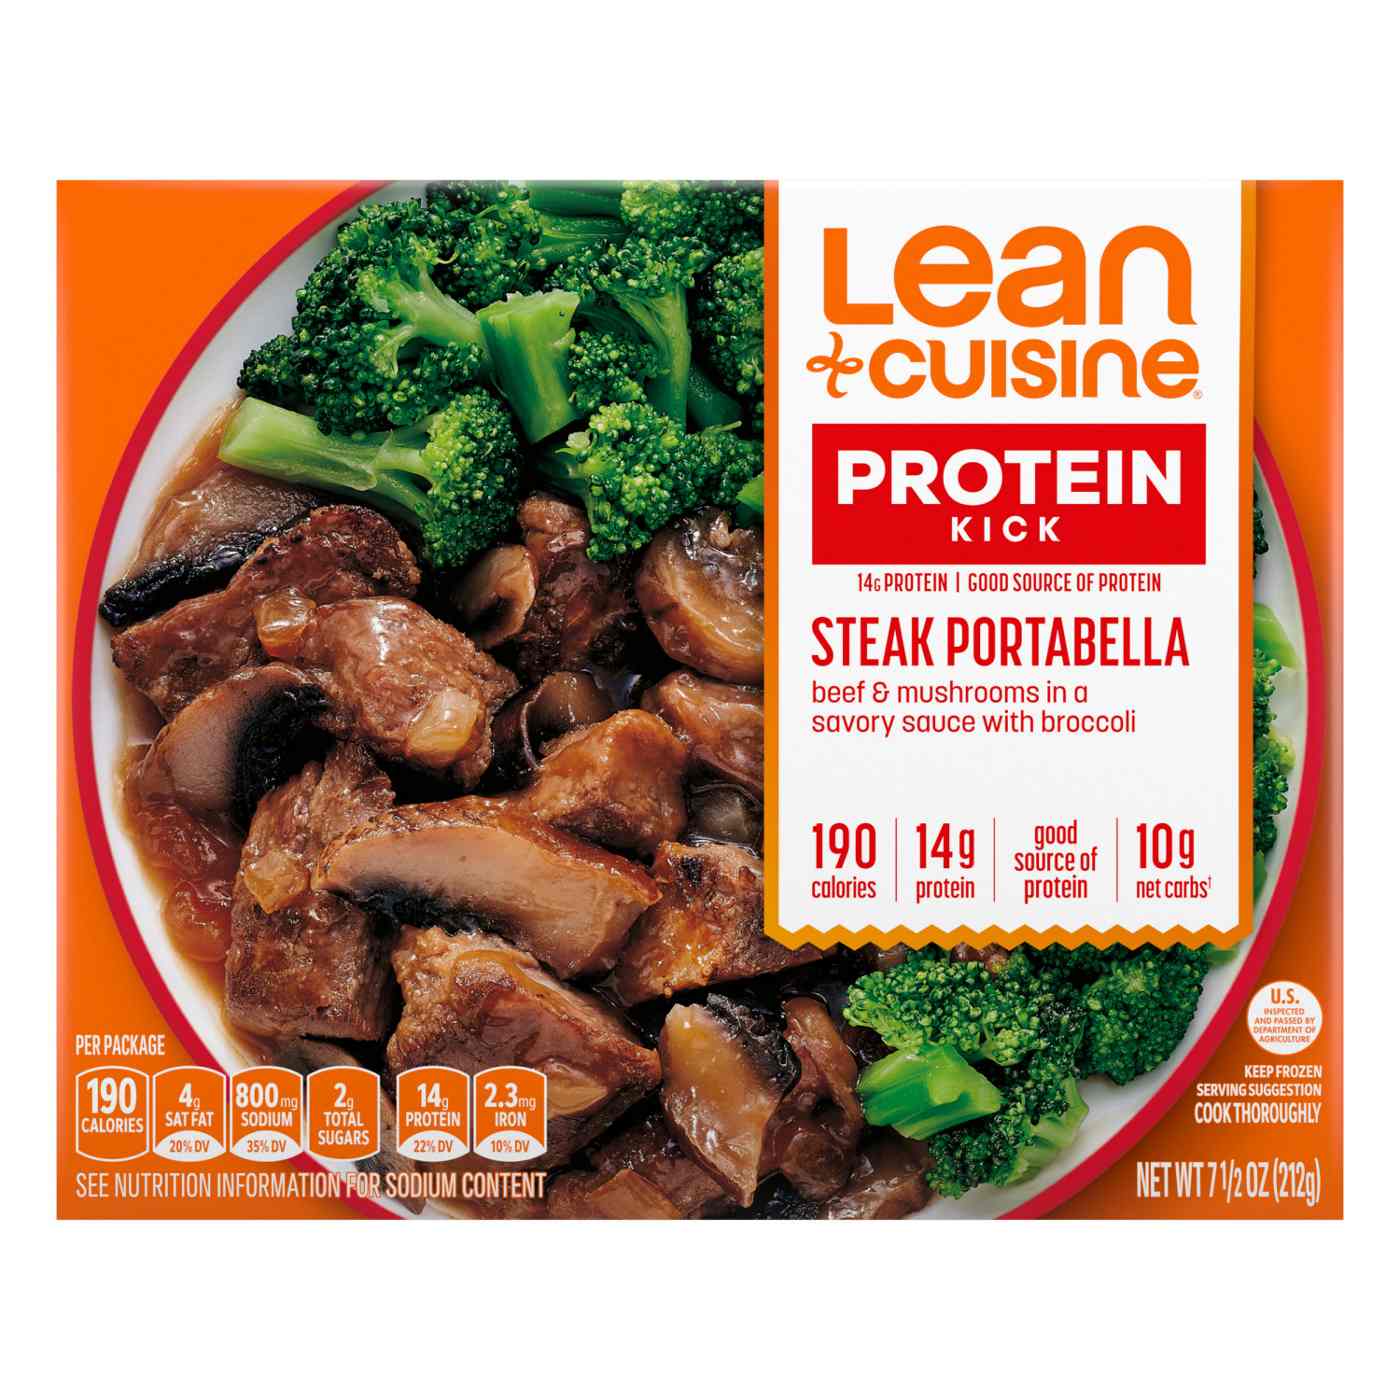 Lean Cuisine 14g Protein Steak Portabella Frozen Meal; image 1 of 7